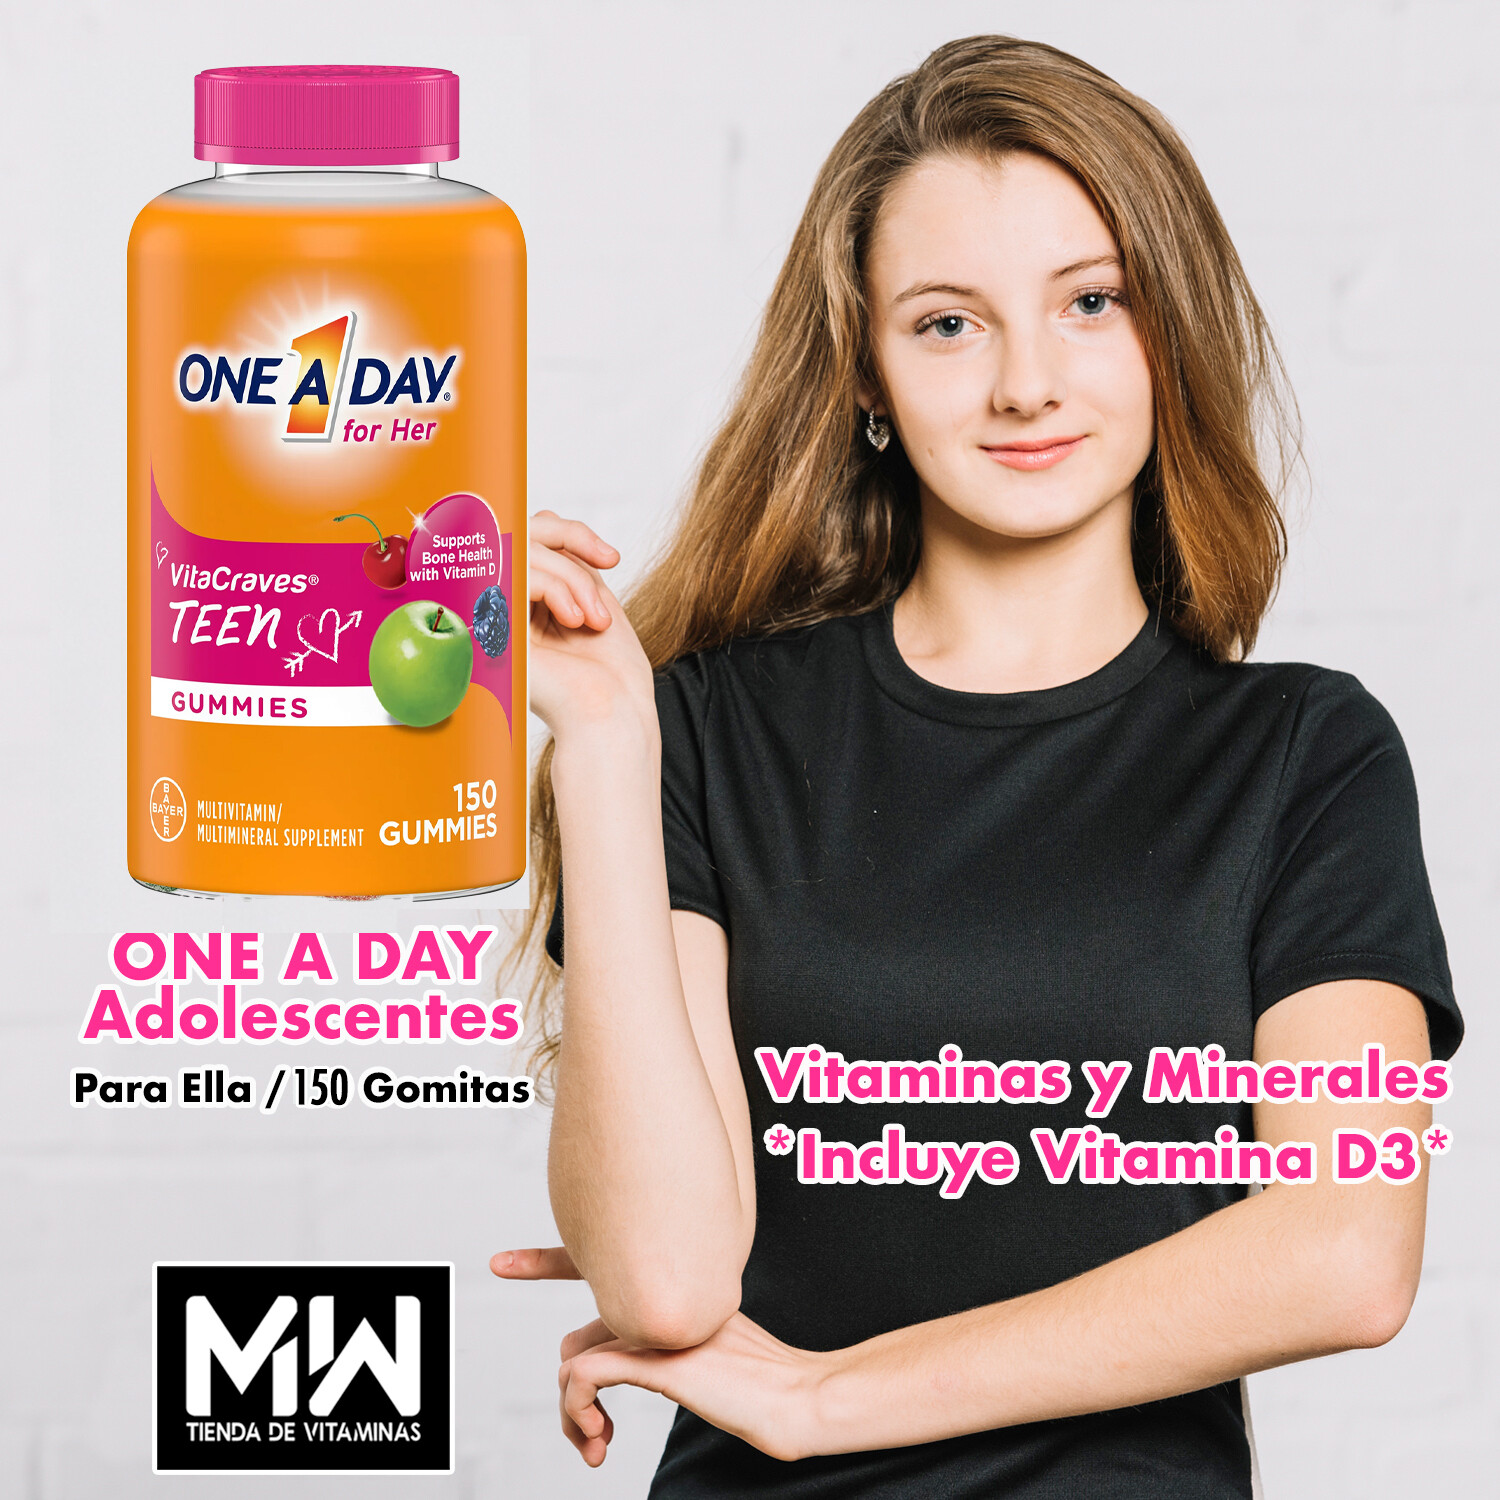 One A Day Multi vitaminas Teen para Ella, 150 gomitas / One a Day Multi vItamin Teen for her gummies